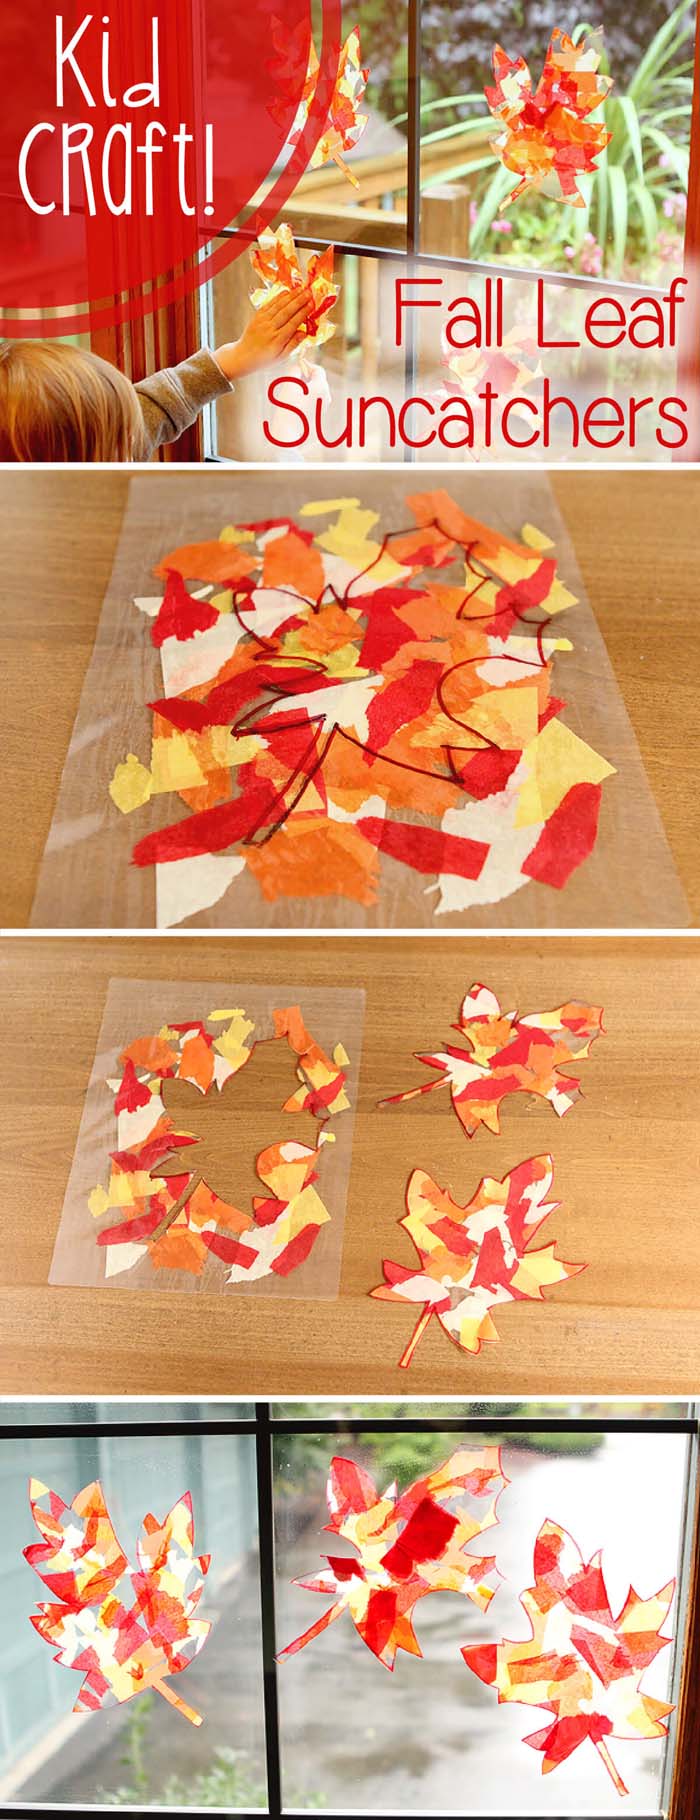 26. Stained Glass Effect Fall Leaf Suncatchers #fall #leaf #crafts #decorhomeideas